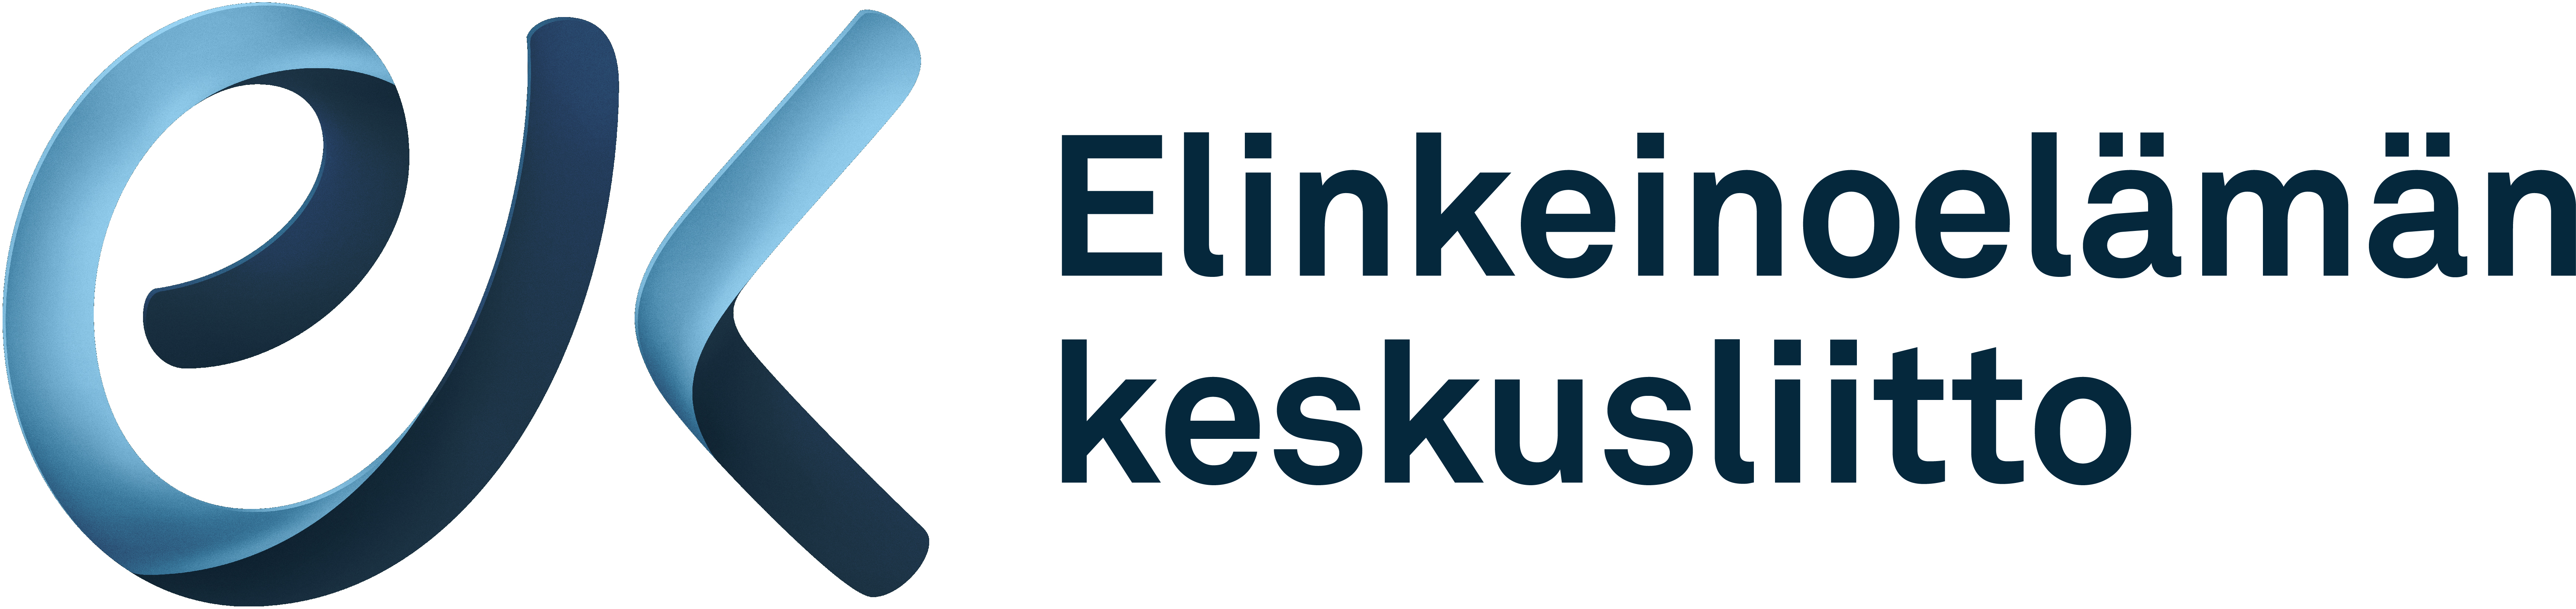 ek_logo_vaaka_fi_sininen.jpg (2.09 MB)